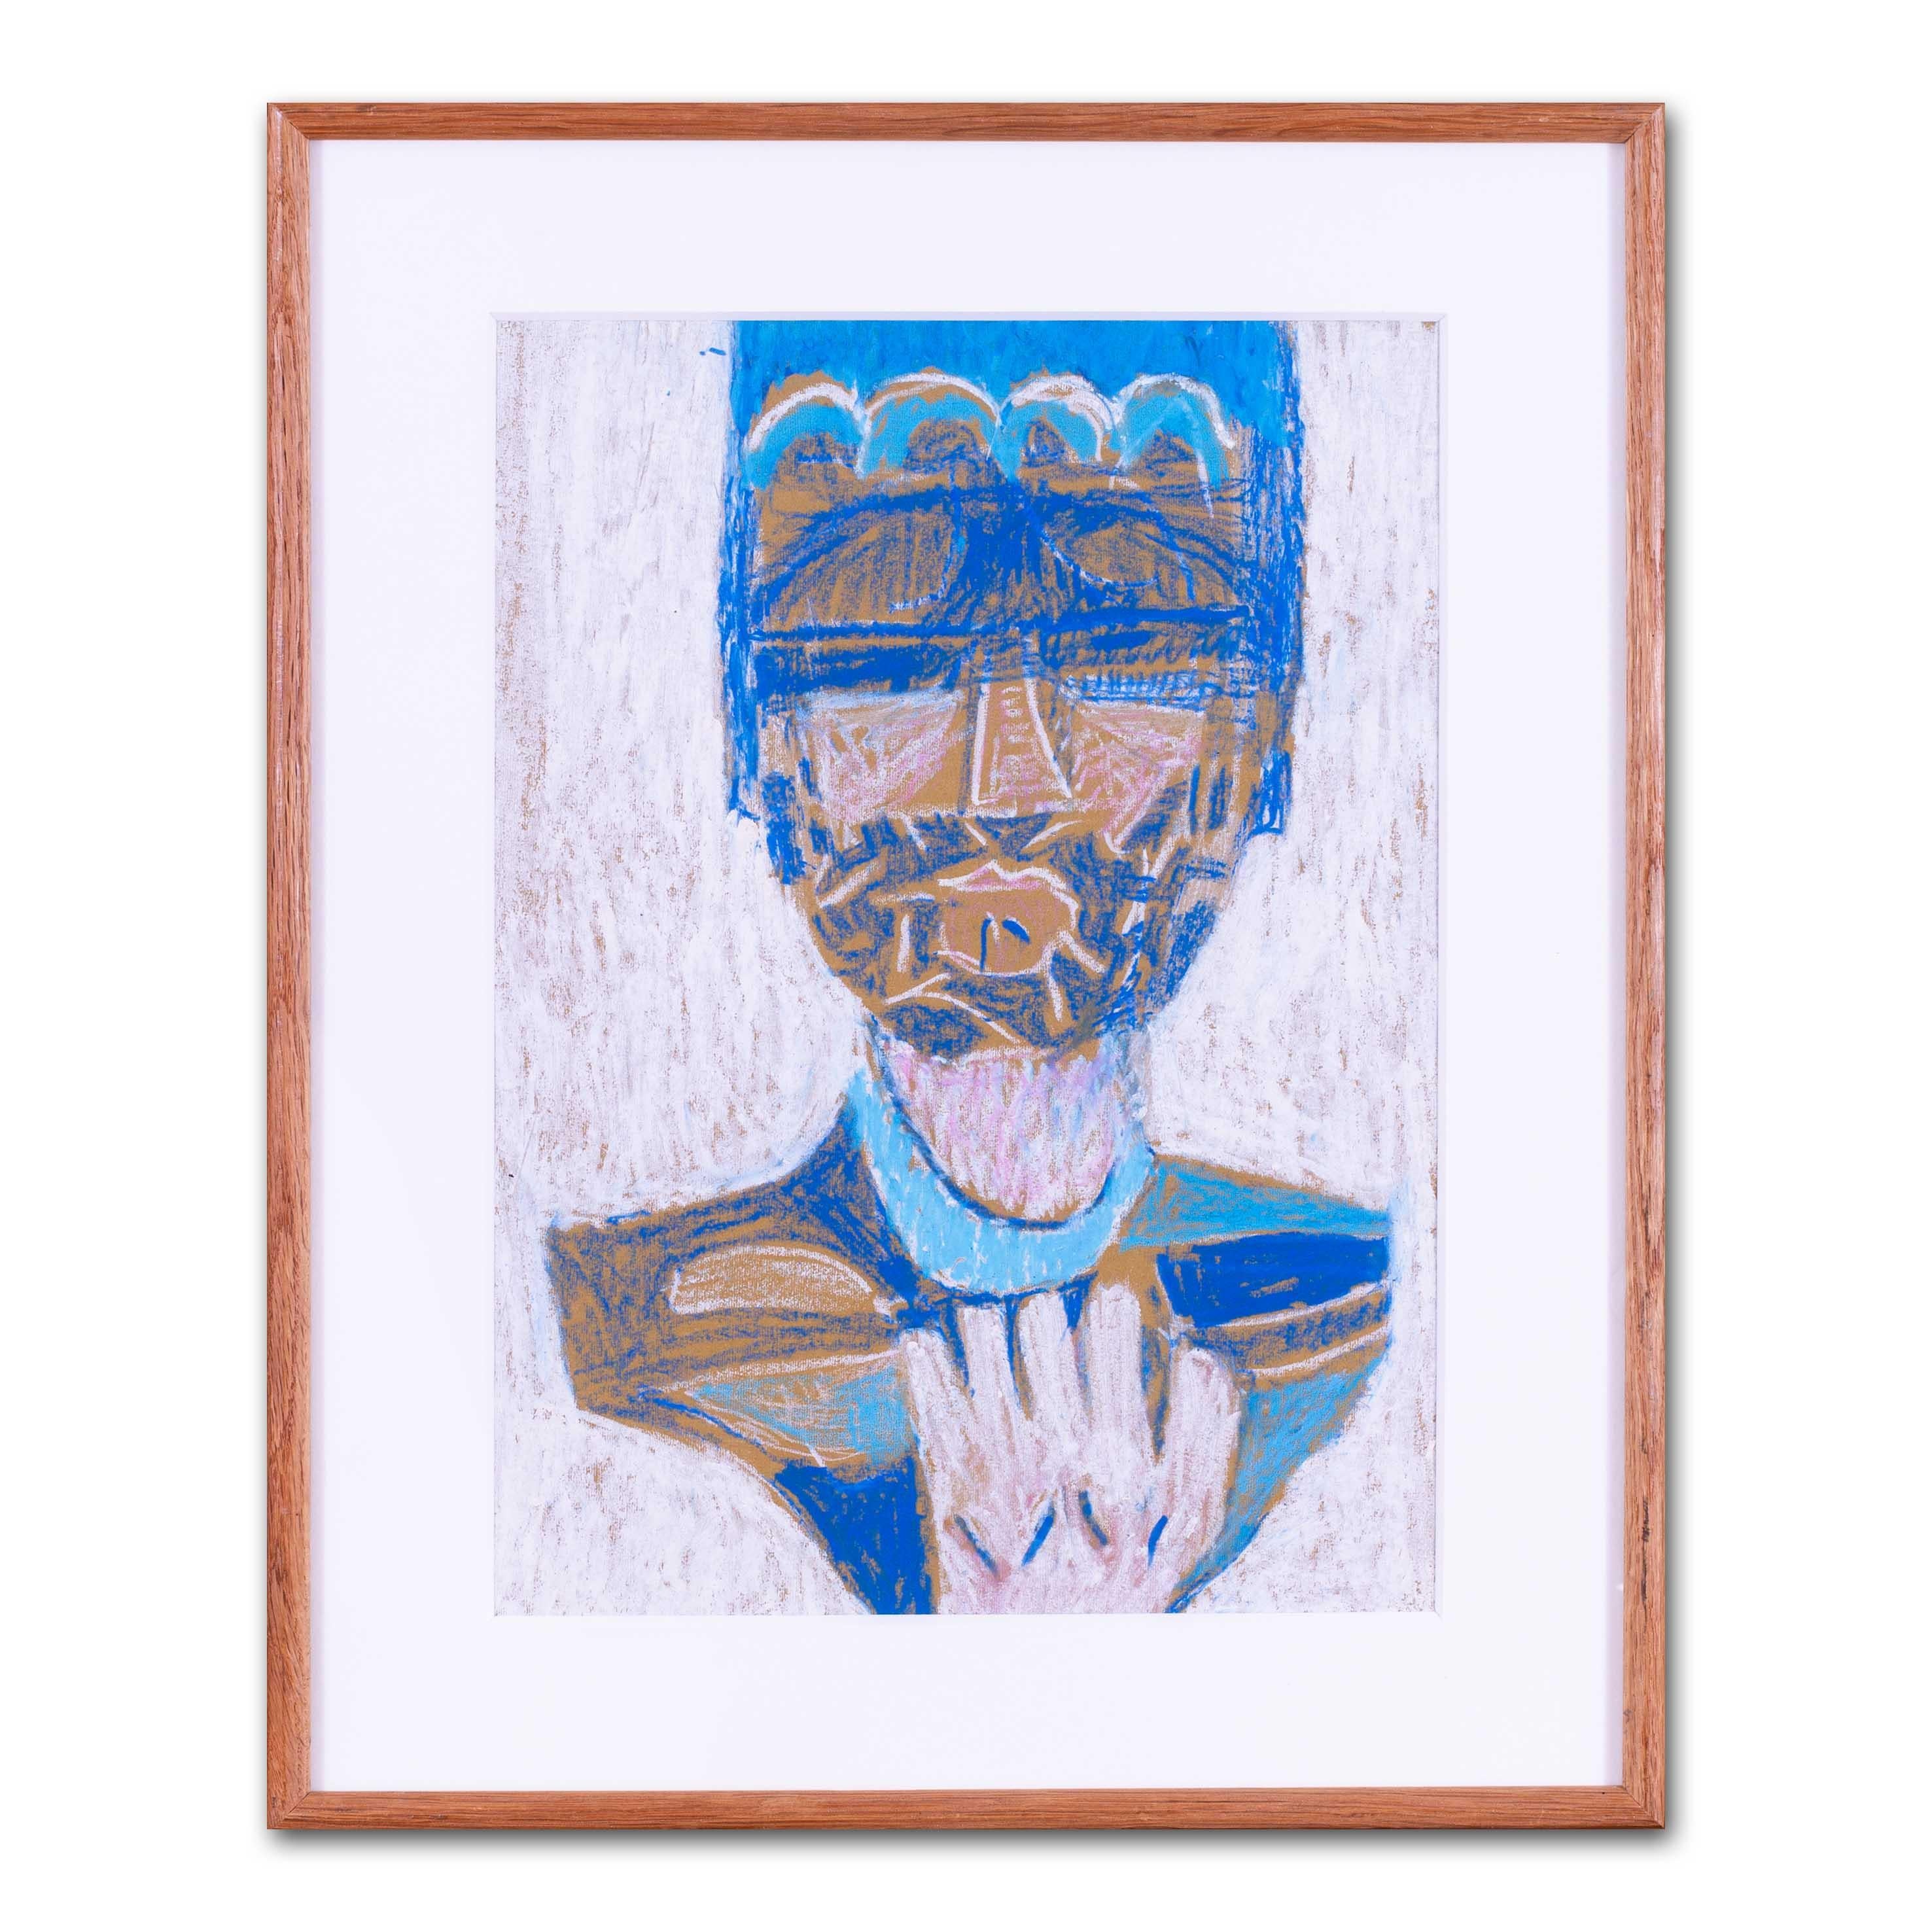 Portrait mythologique abstrait en bleu de l'artiste Modern British Ewart Johns